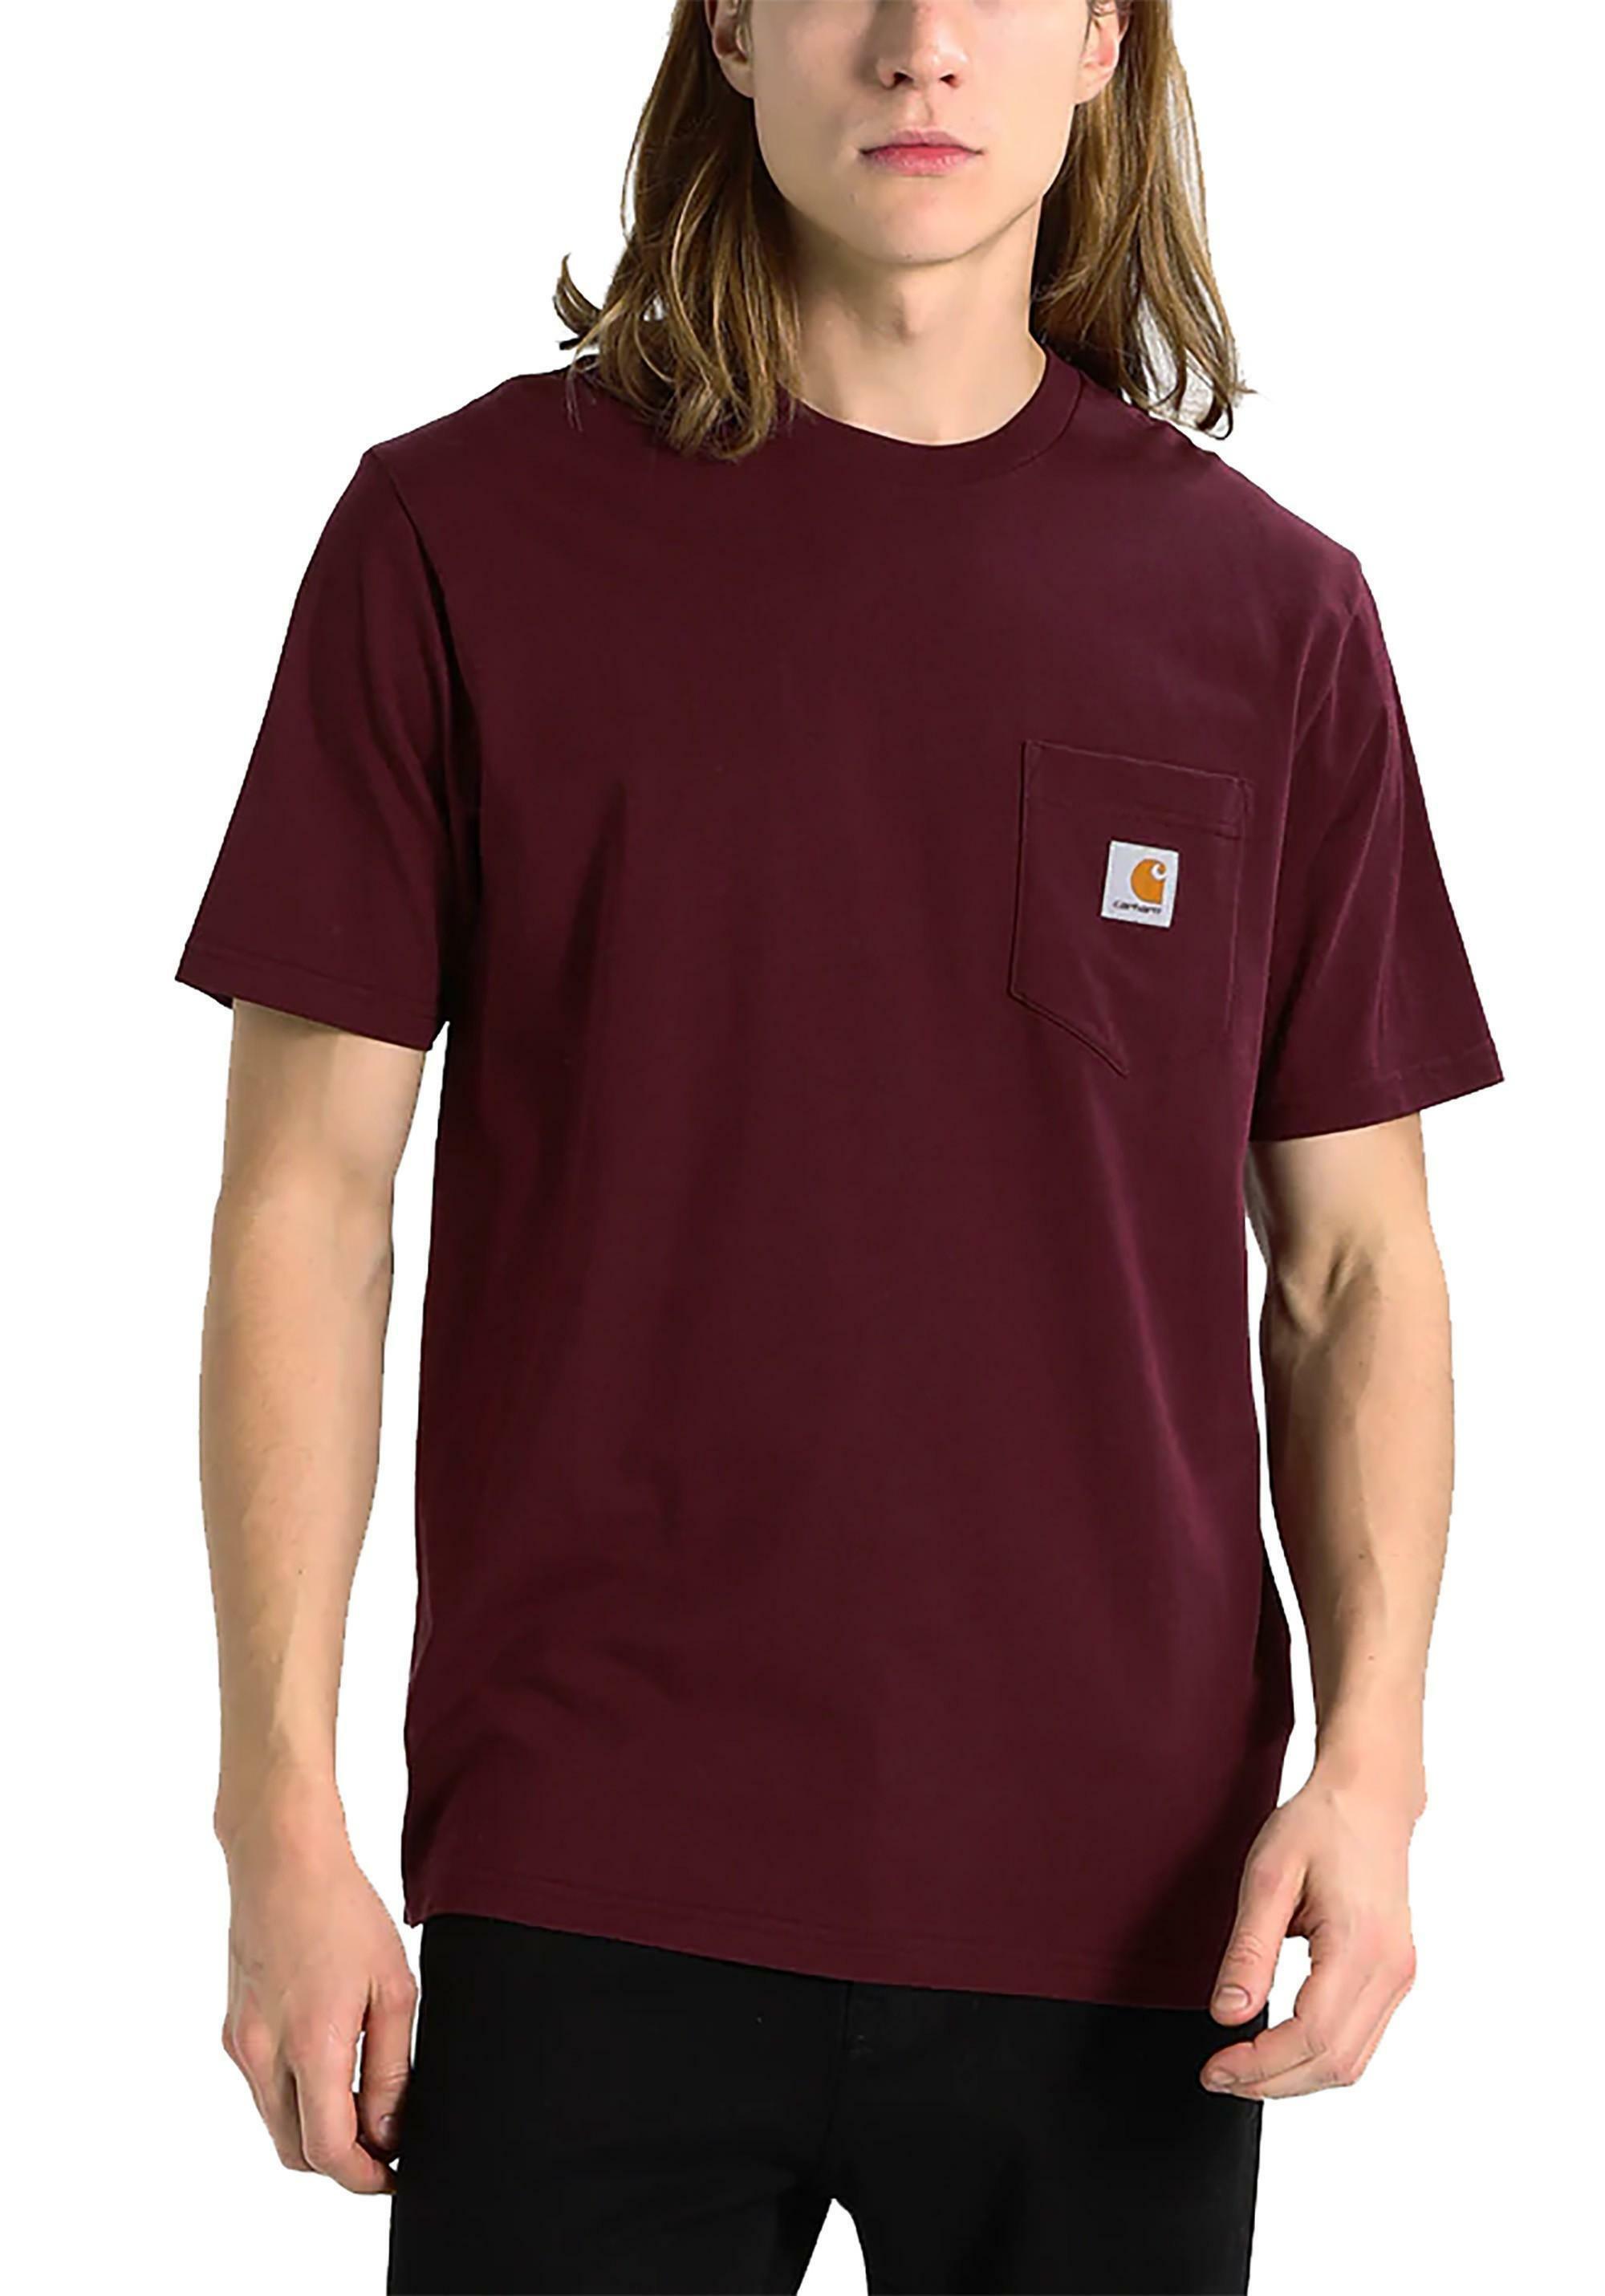 carhartt carhartt pocket t-shirt uomo bordeaux i022091221